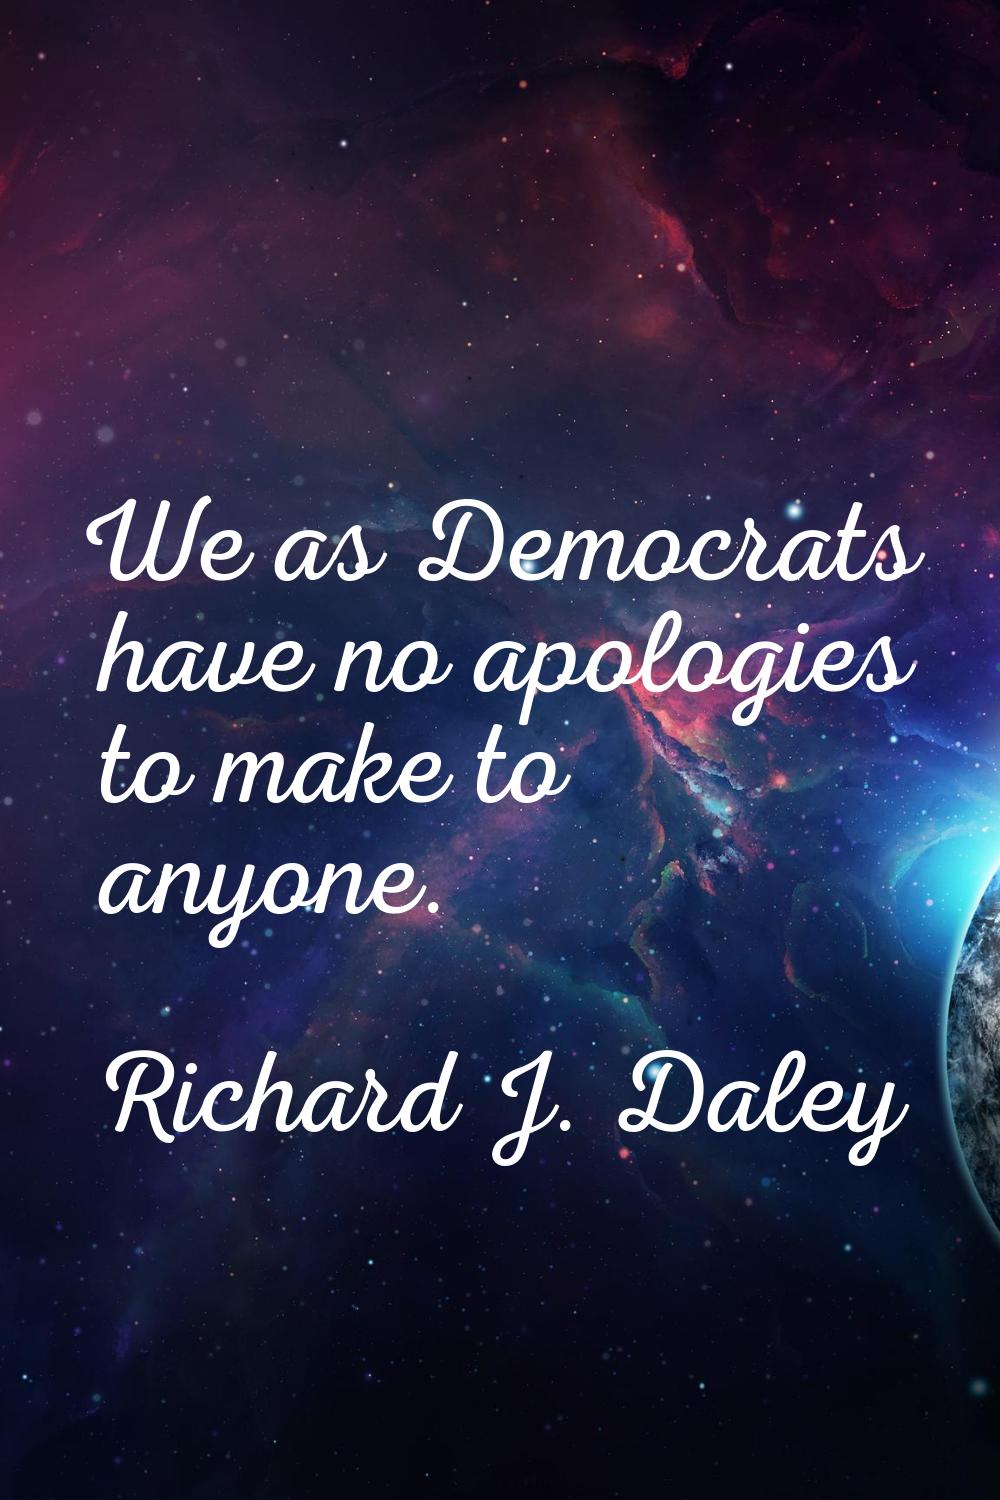 We as Democrats have no apologies to make to anyone.